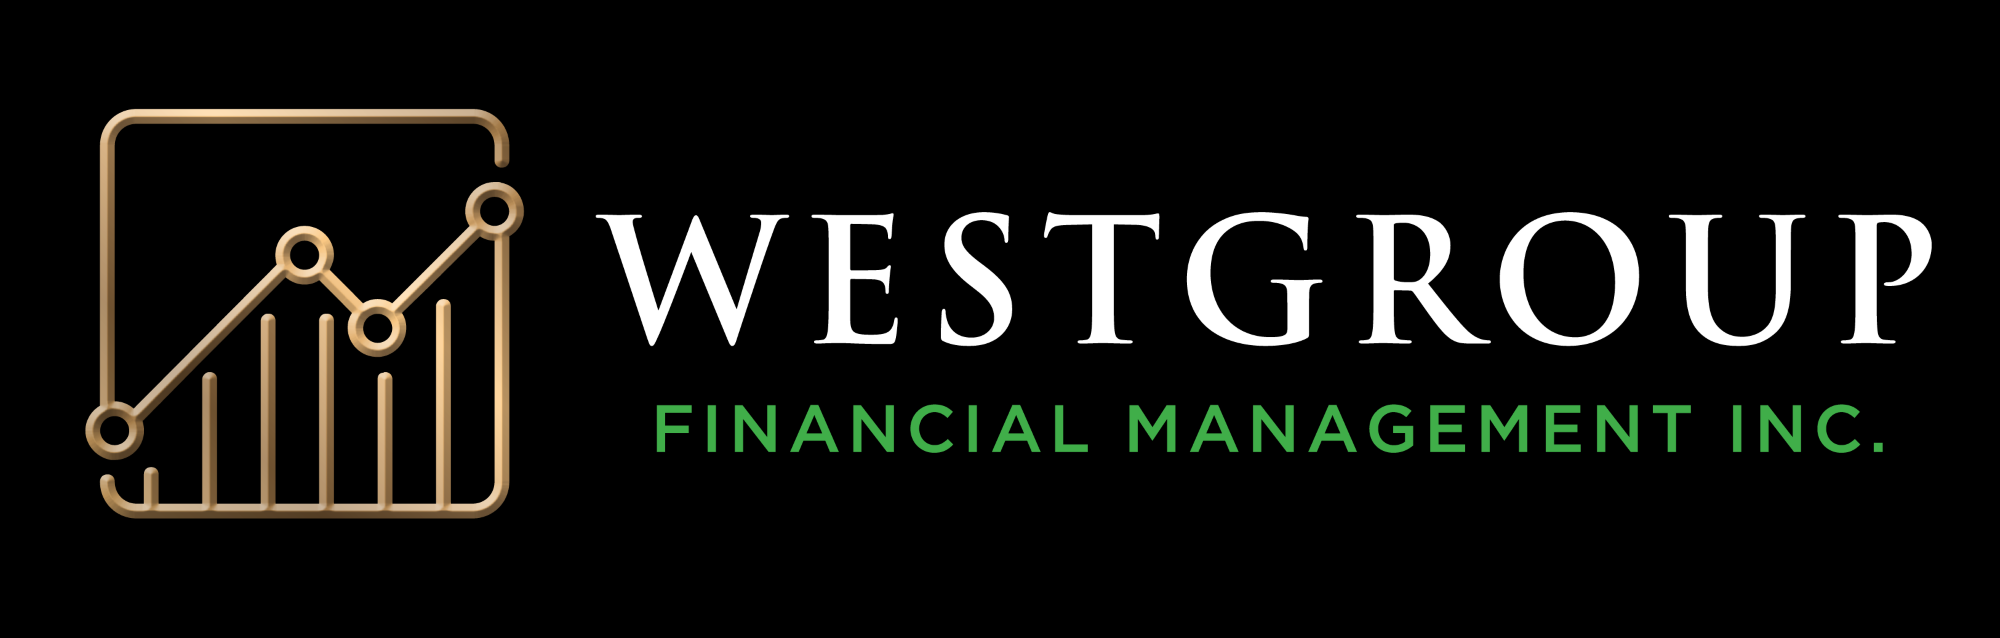 Winner Image - Westgroup Financial Management Inc